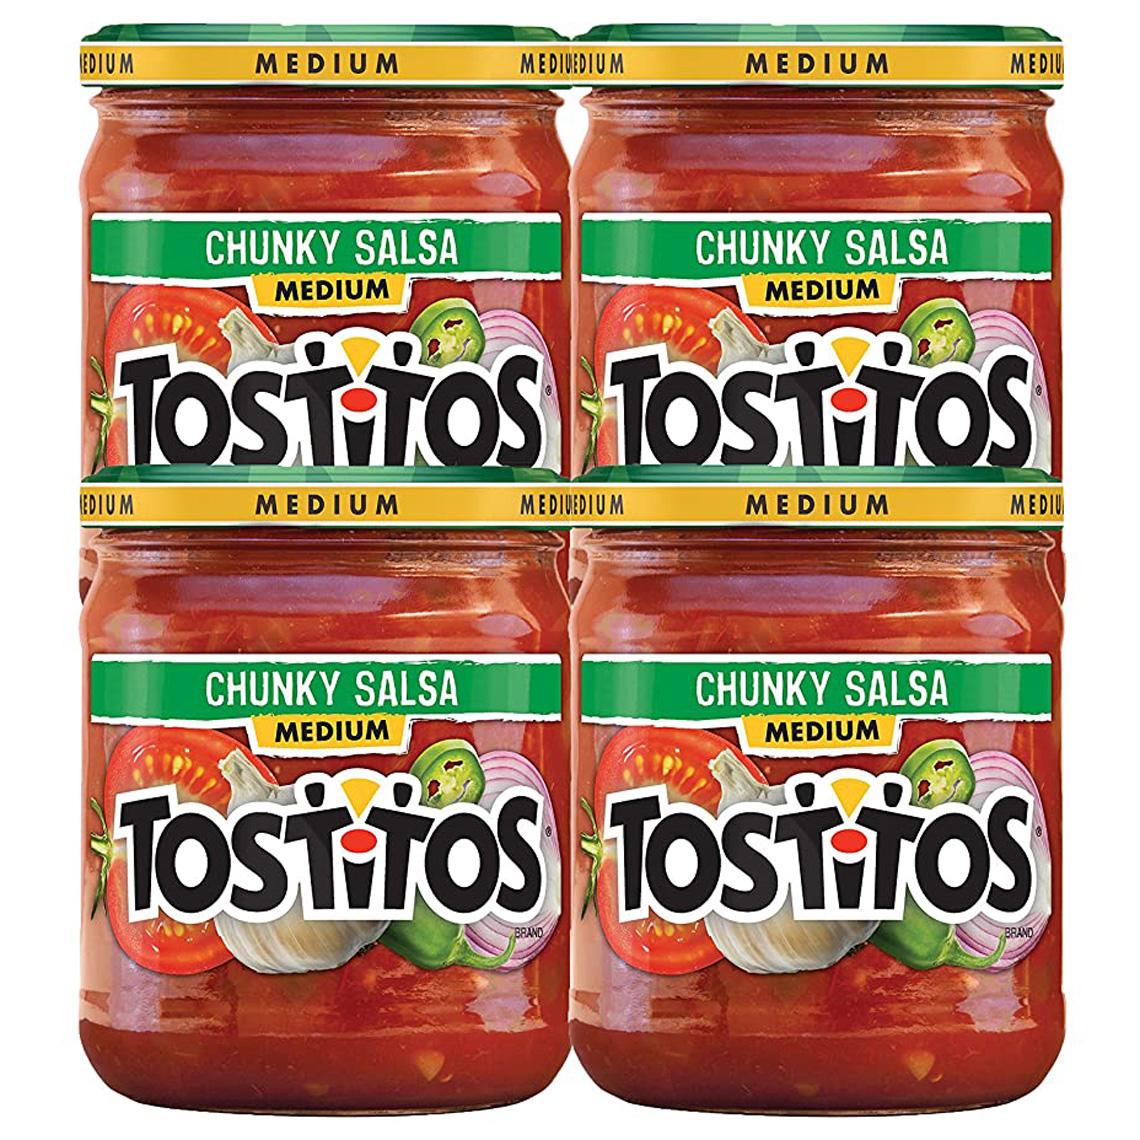 4-Pack 15.5-Oz Tostitos Medium Chunky Salsa for $9.09 Shipped